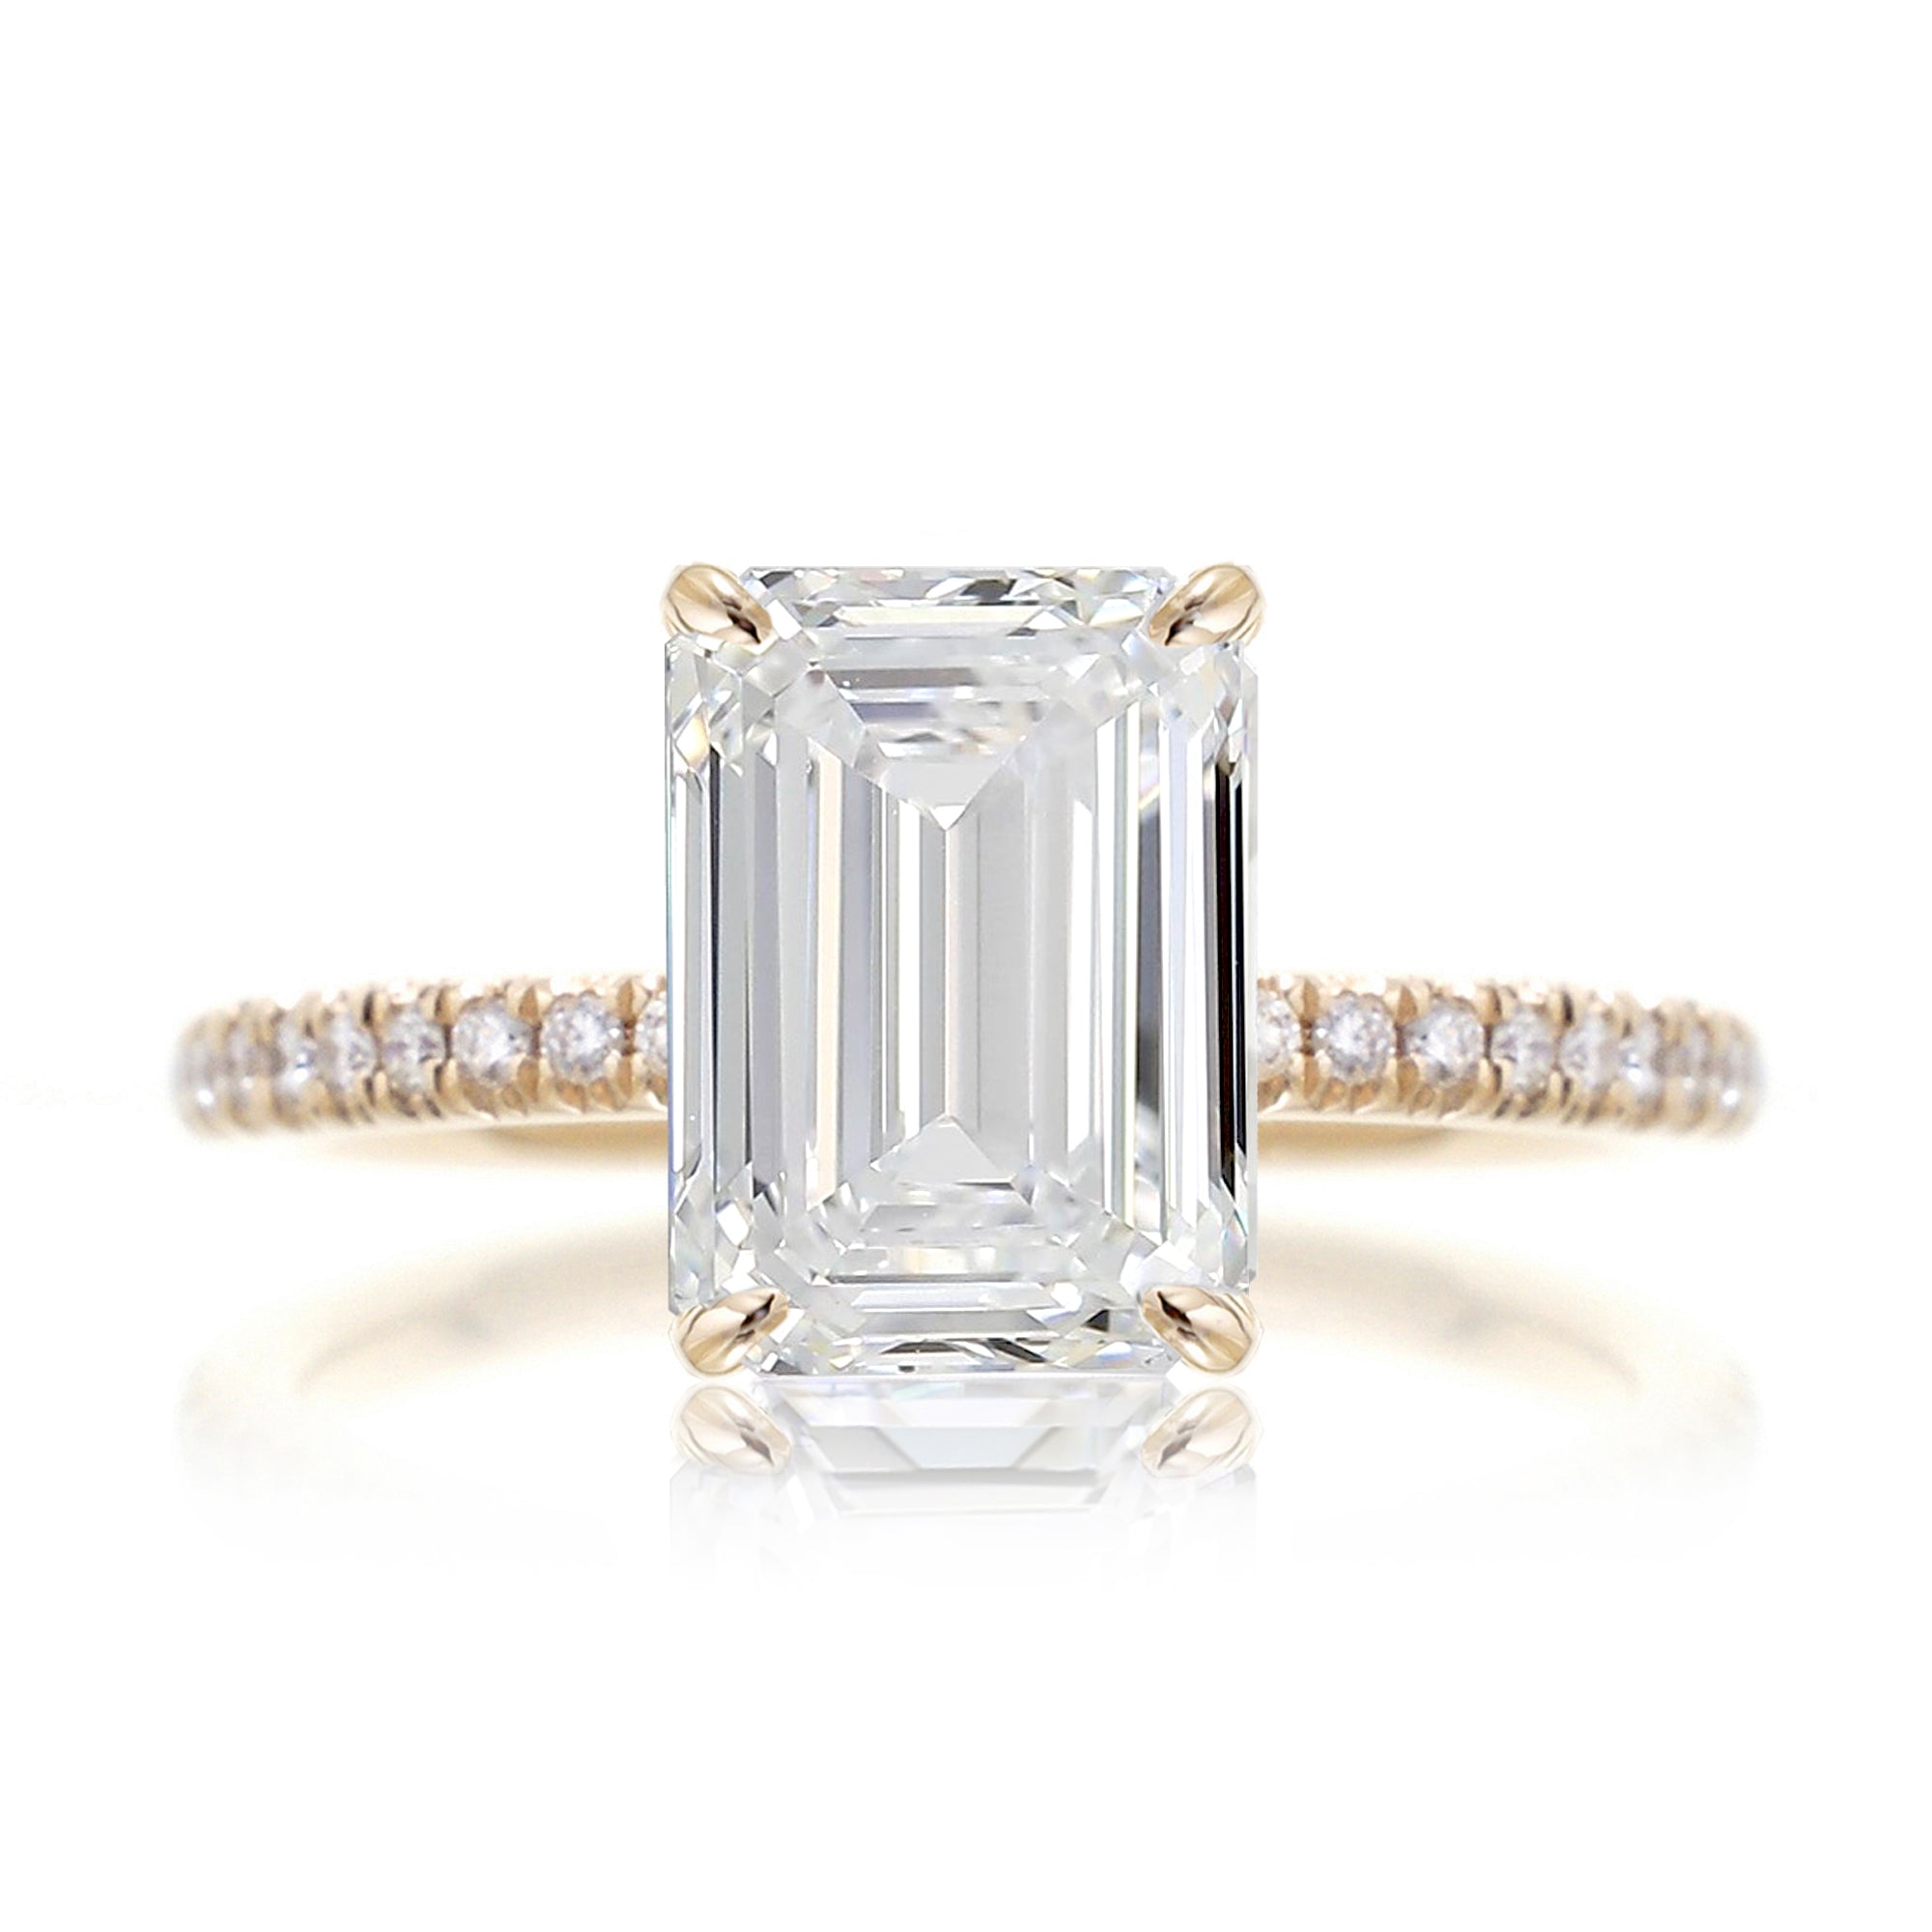 Emerald cut diamond band engagement ring yellow gold - the Ava